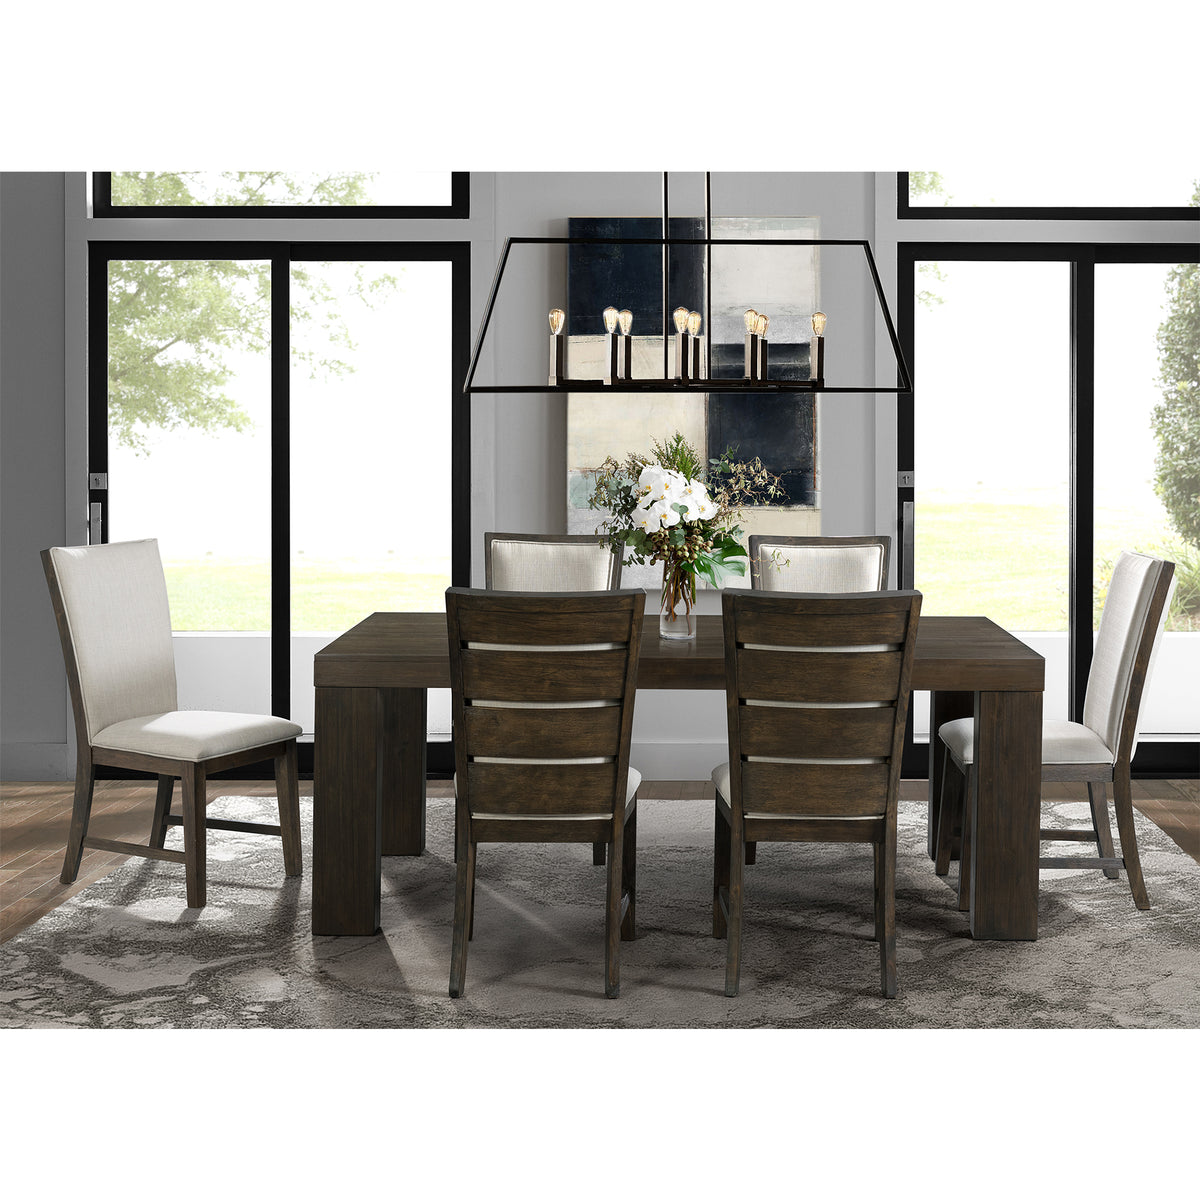 Brayden Dining Room Table - MJM Furniture